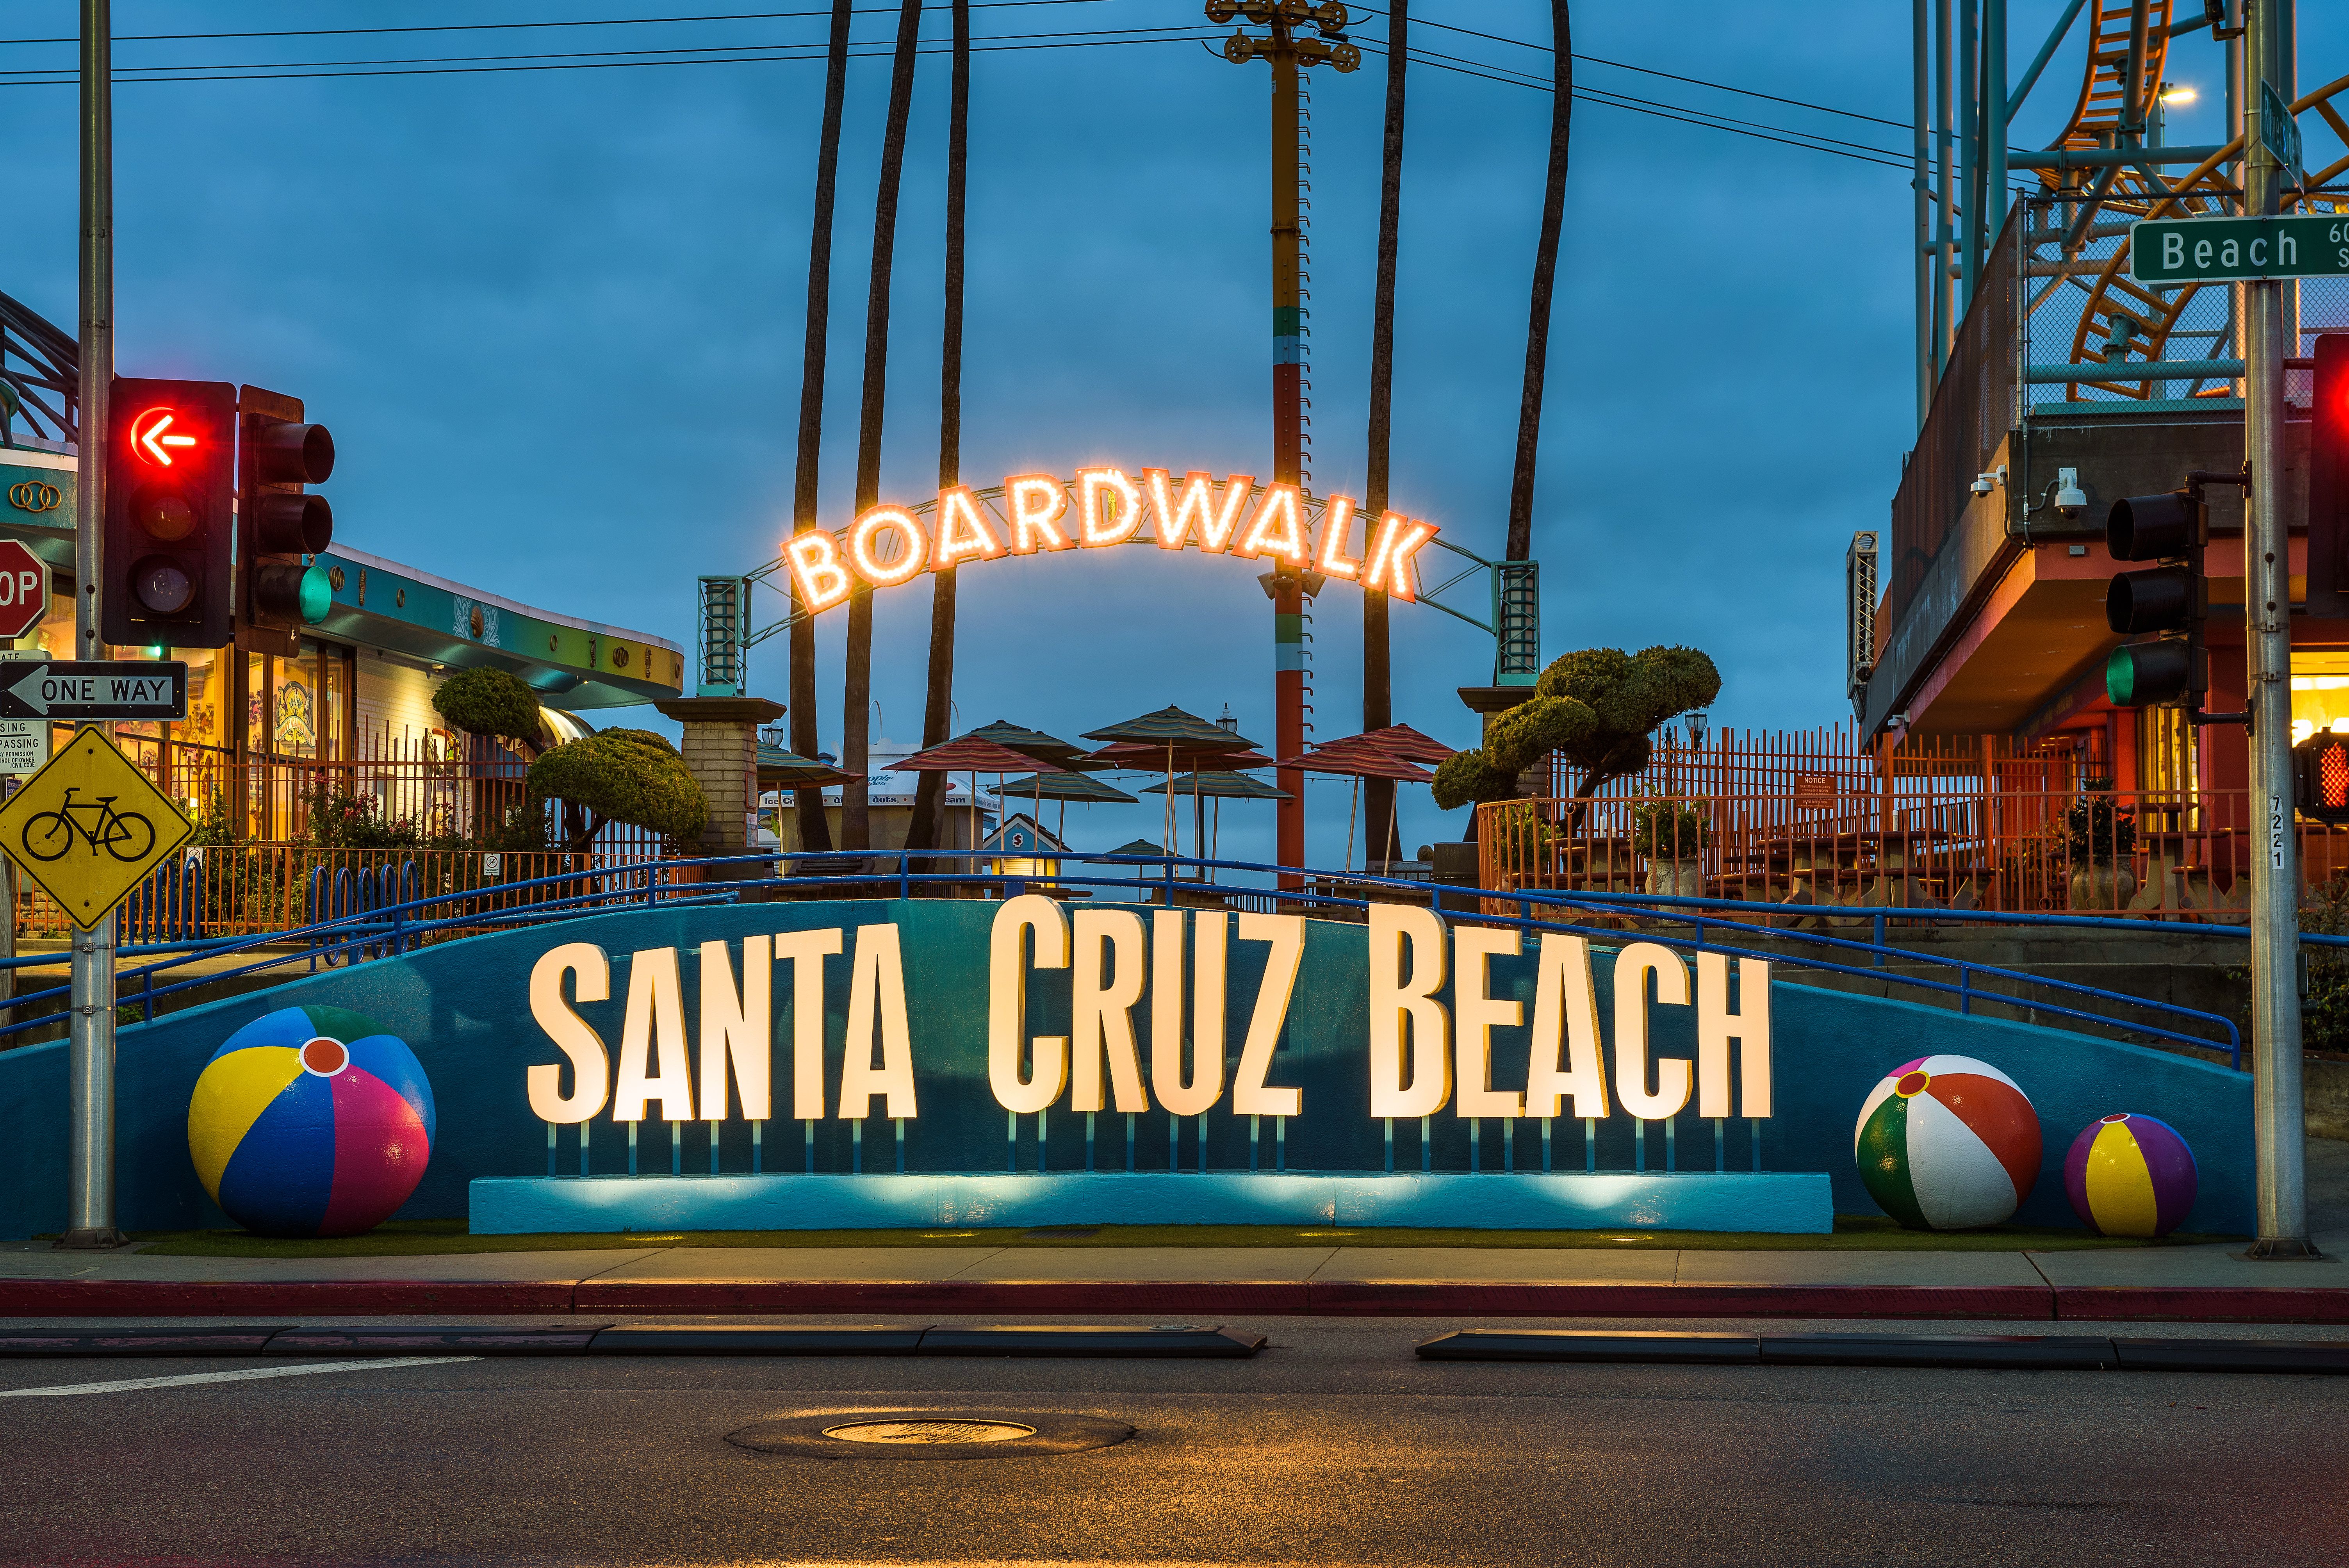 Sign for Santa Cruz Beach Boardwalk